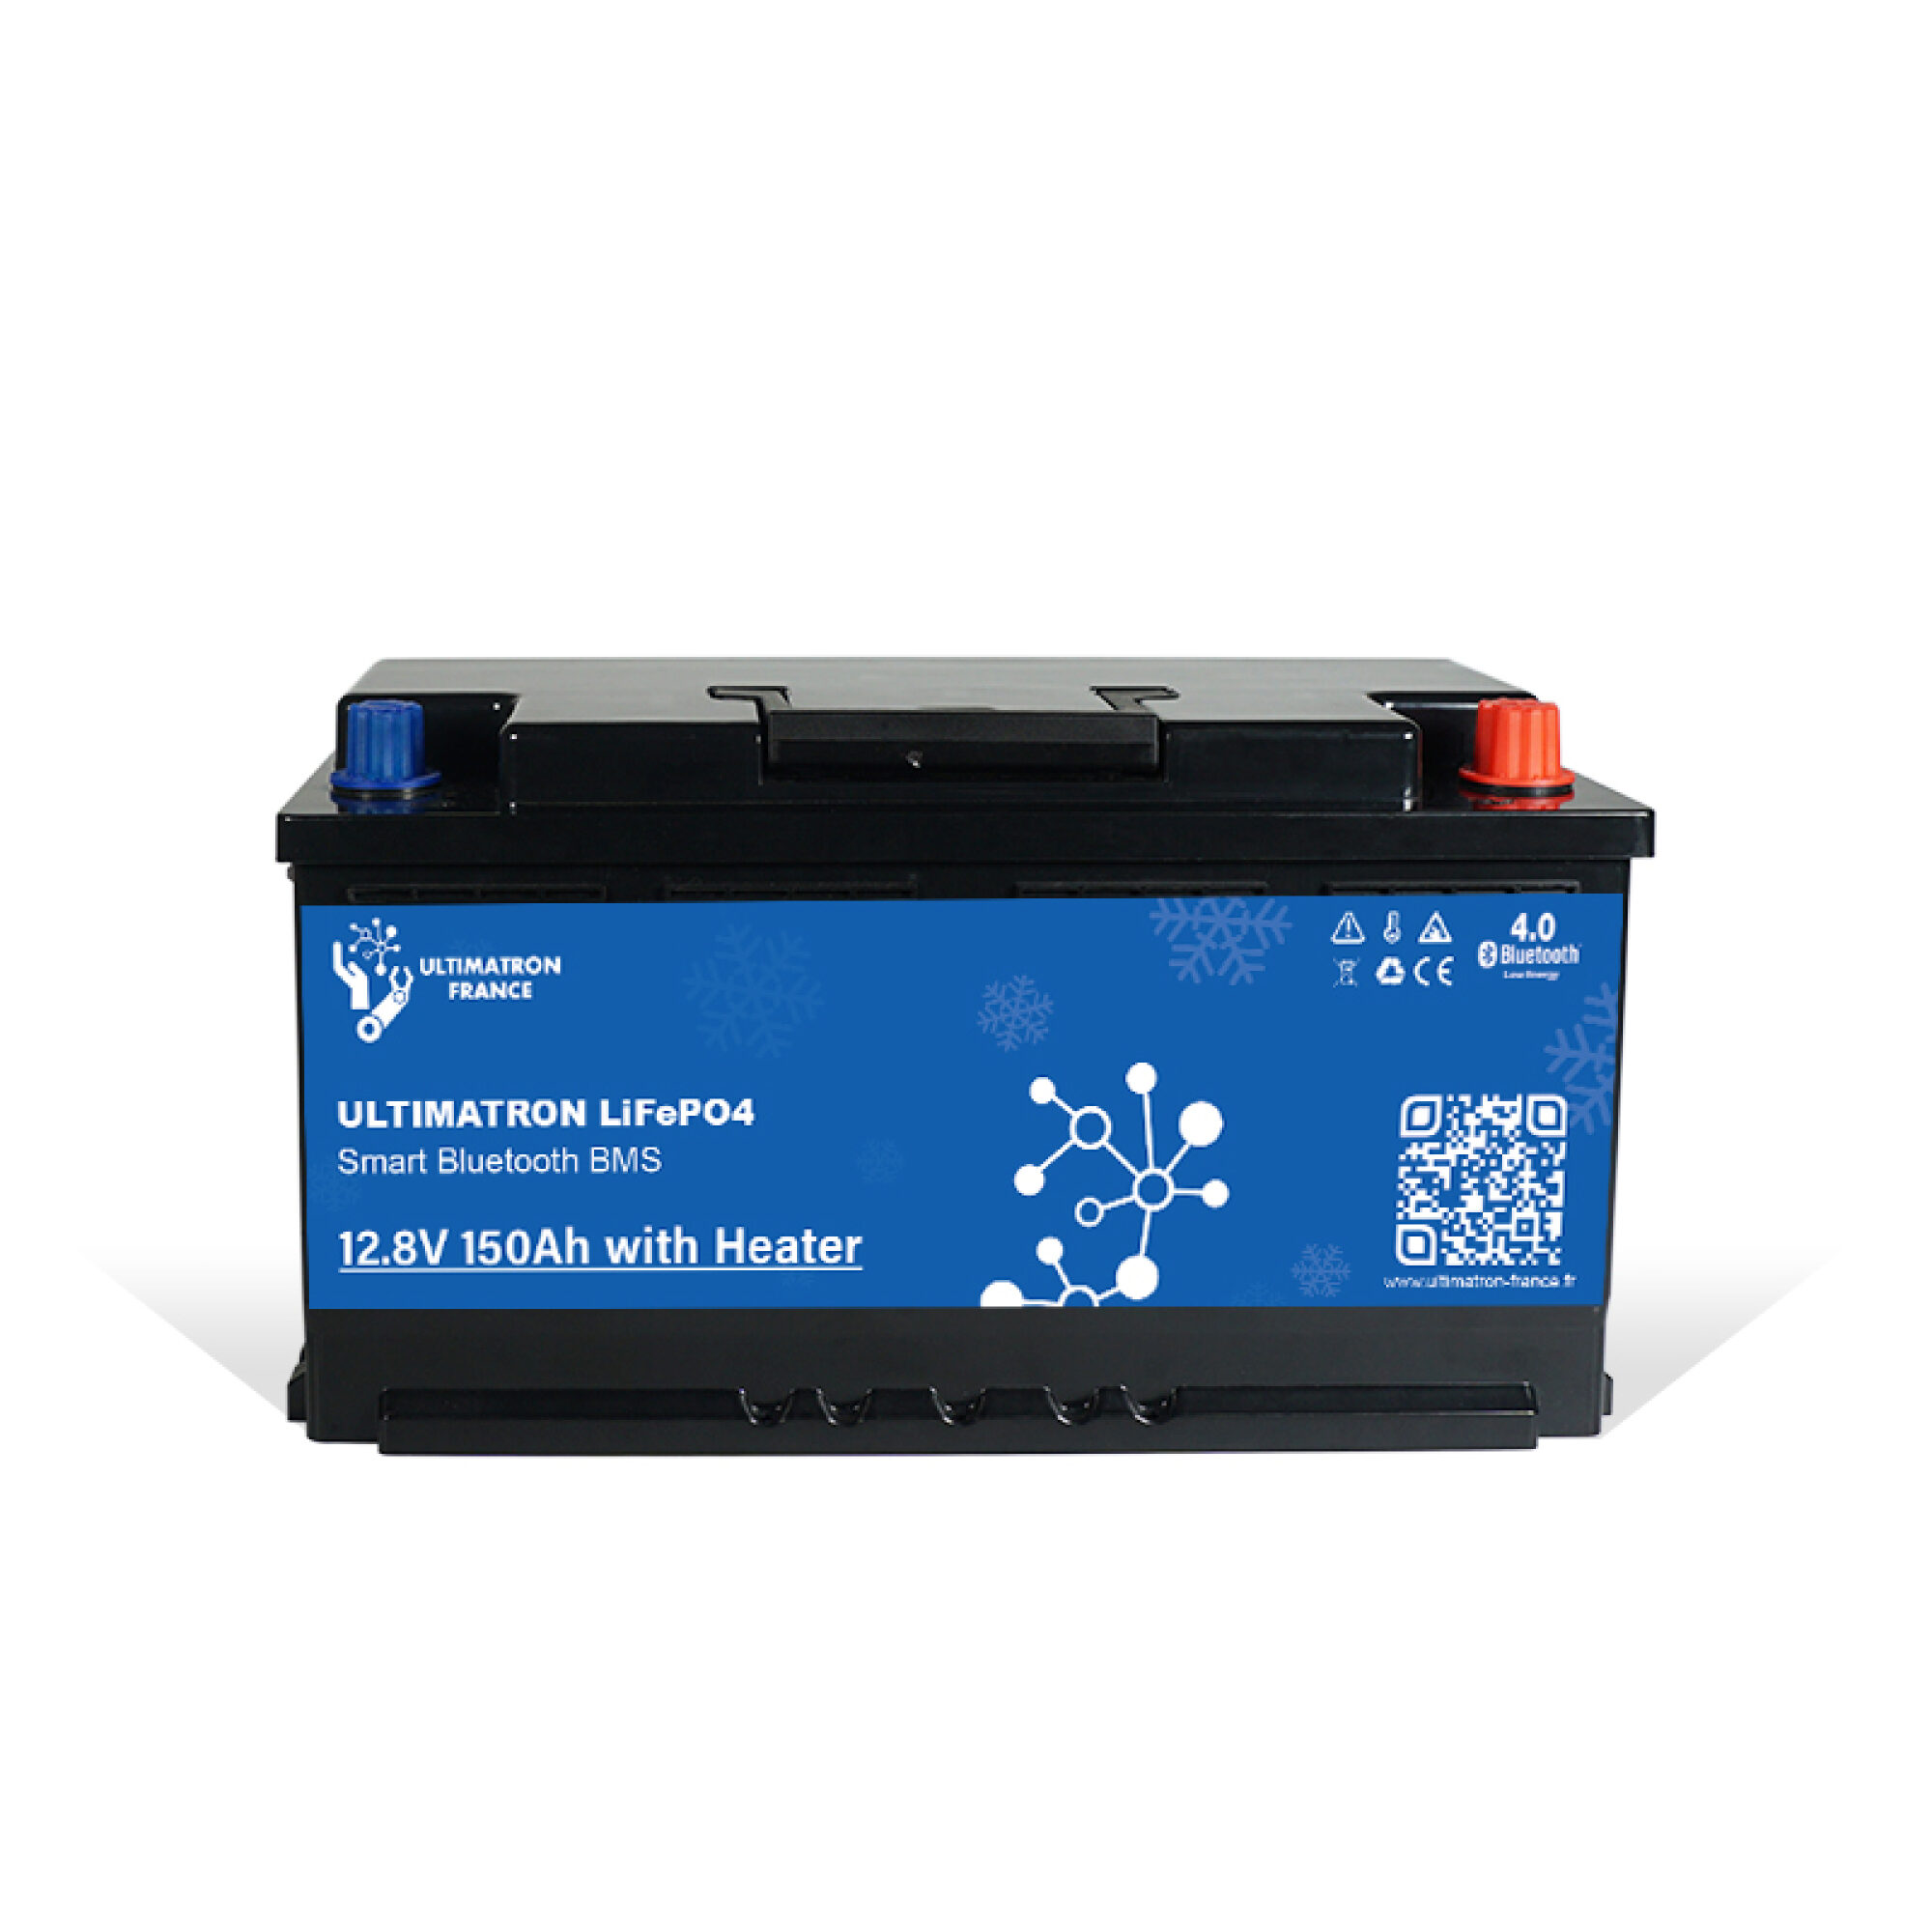 Ultimatron LiFePO4 Untersitz-12.8V 150Ah Lithiumbatterie Smart BMS mit Bluetooth Wohnmobil Untersitzbatterie